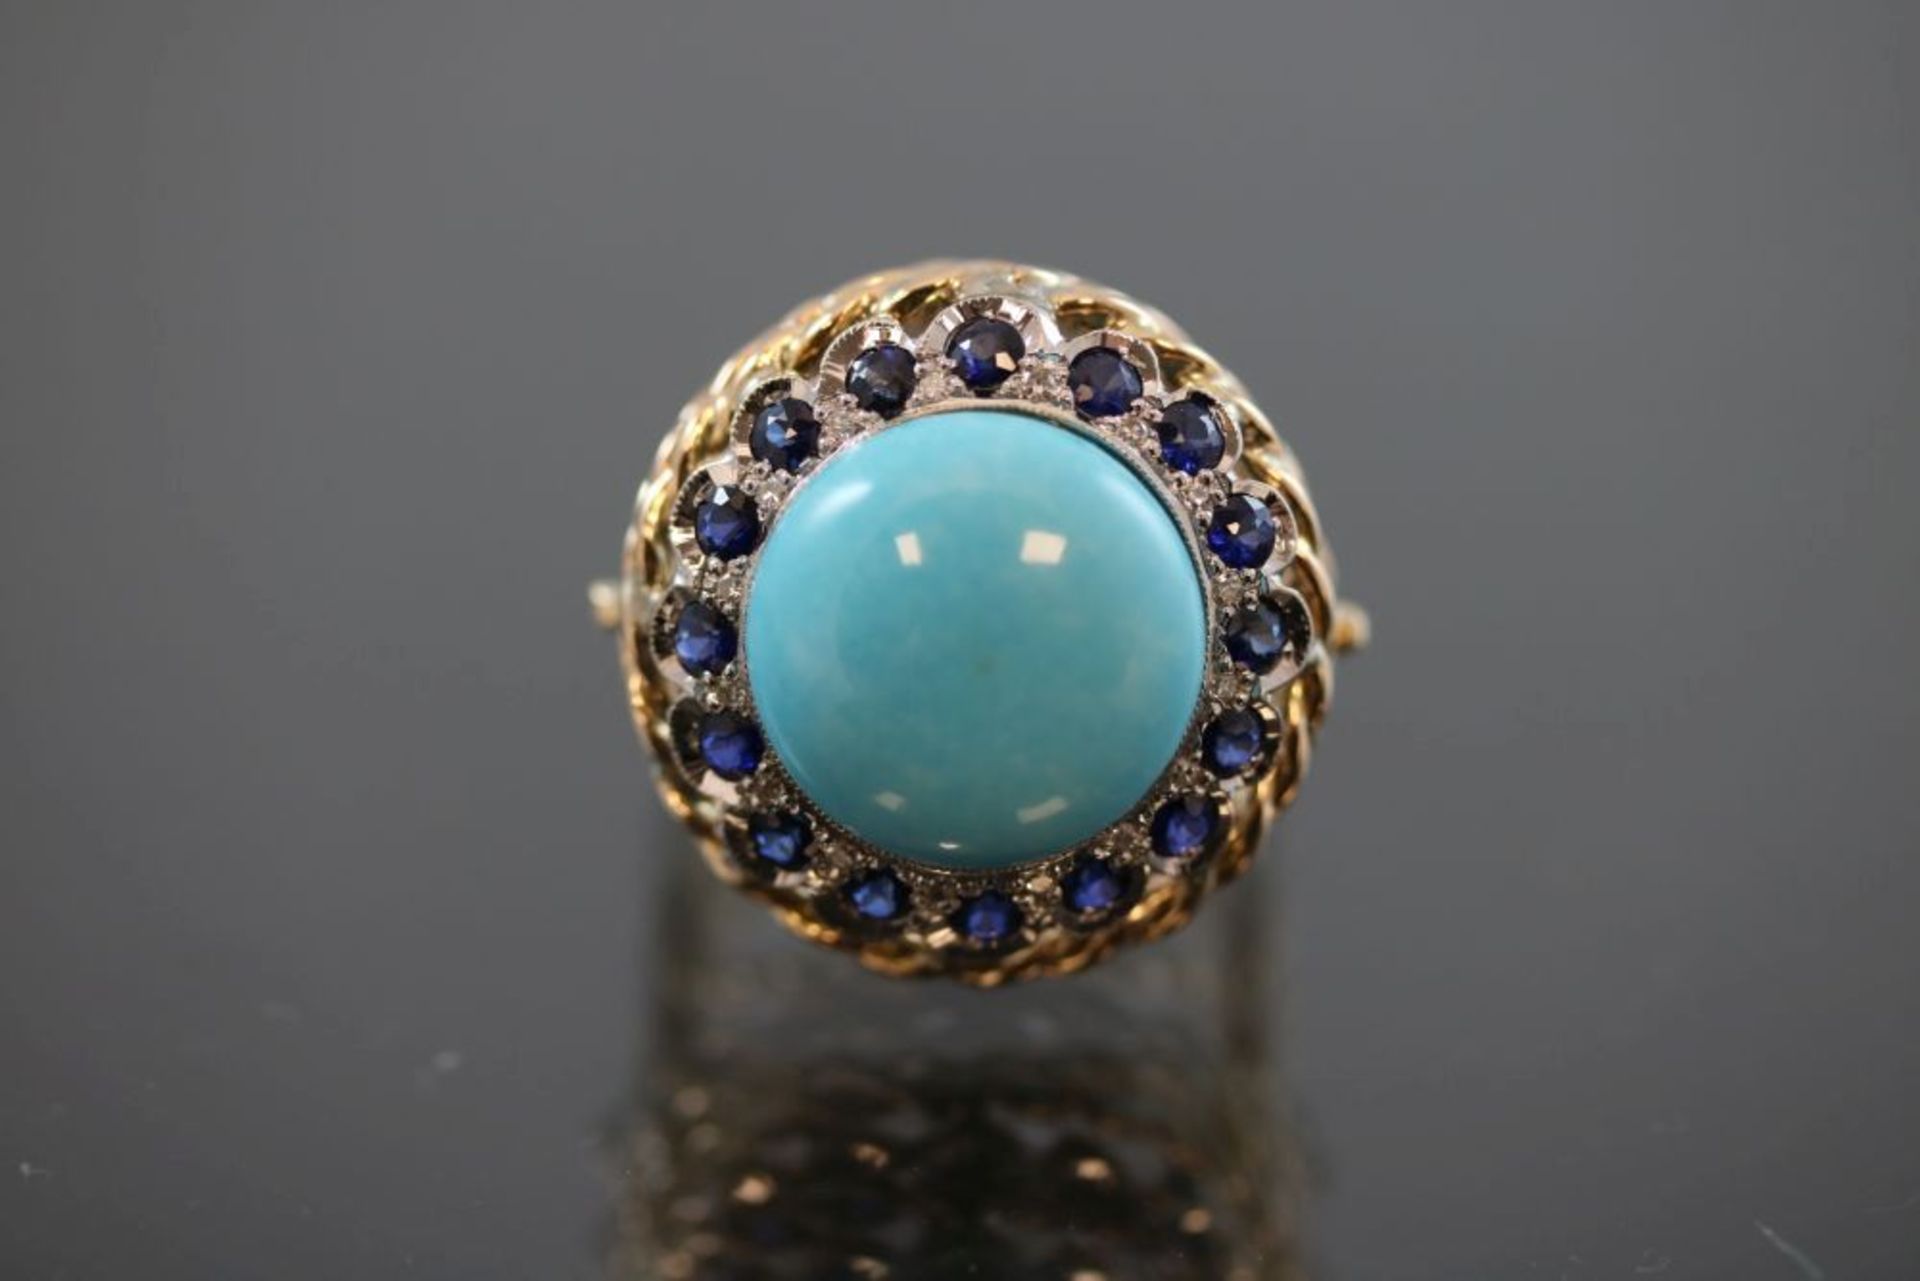 Diamant-Türkis-Saphir-Ring, 585 Gold11,9 Gramm Ringgröße: 58Neu- - -25.00 % buyer's premium on the